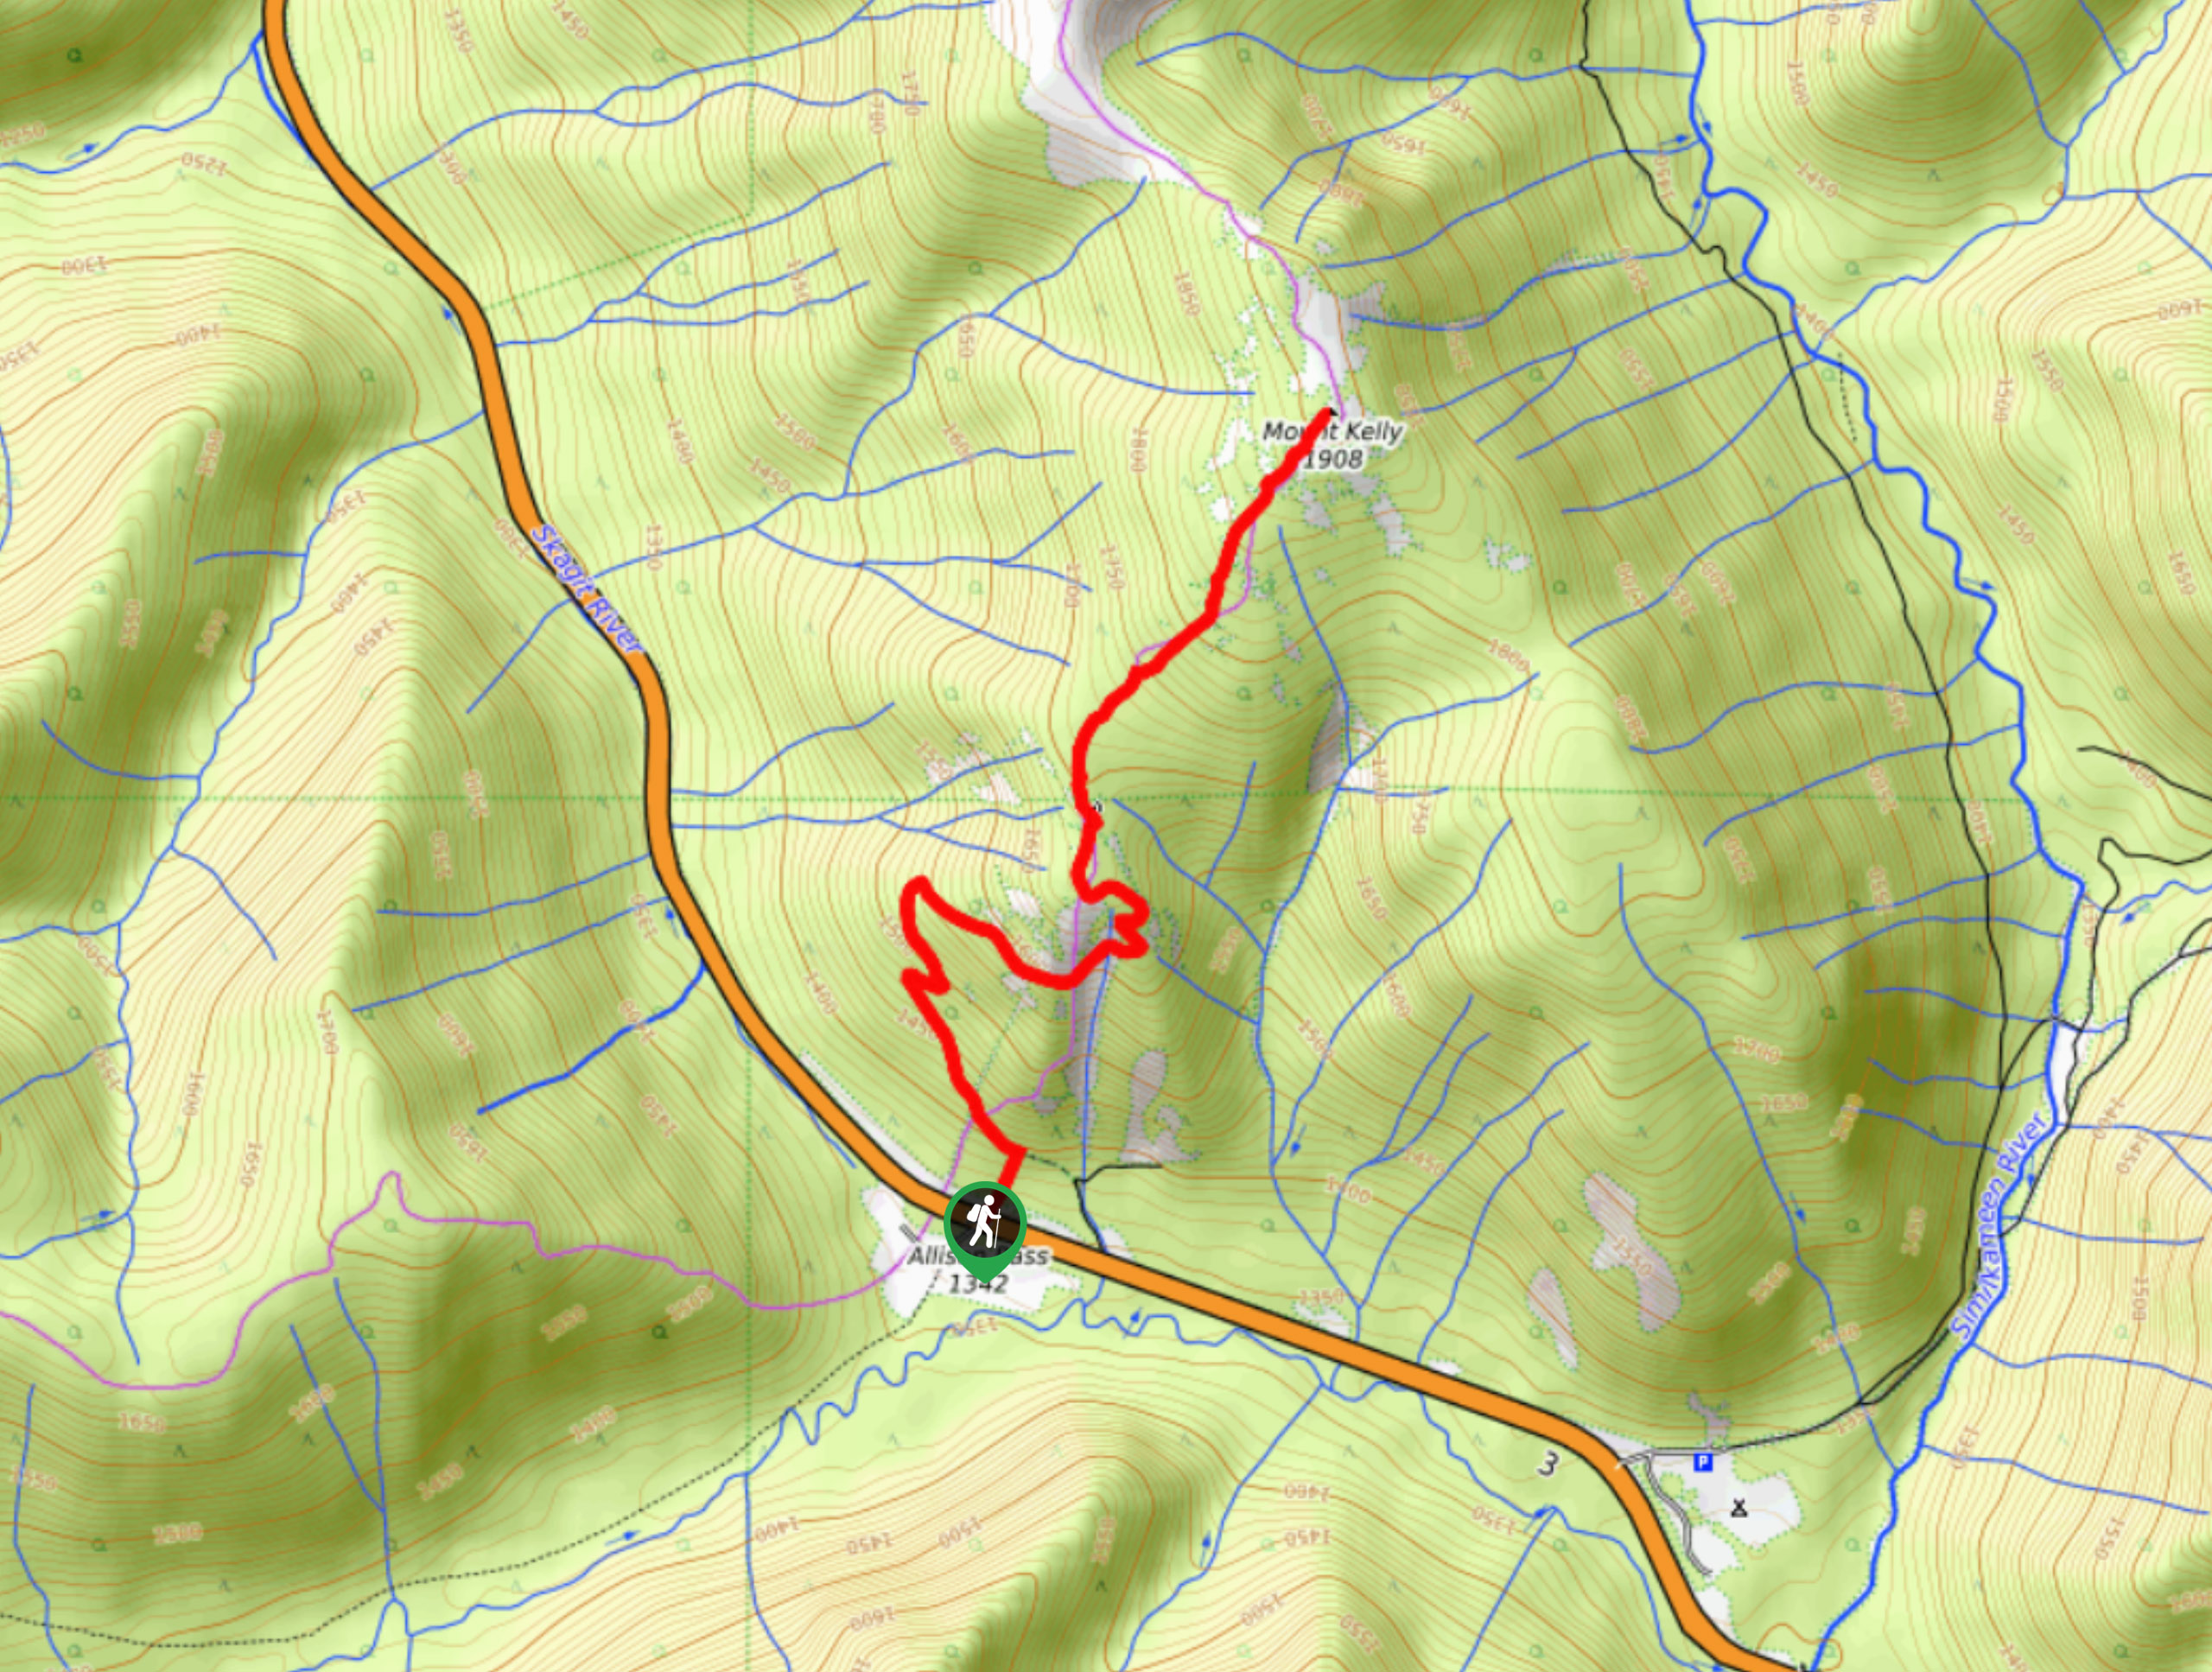 Mount Kelly Trail Map